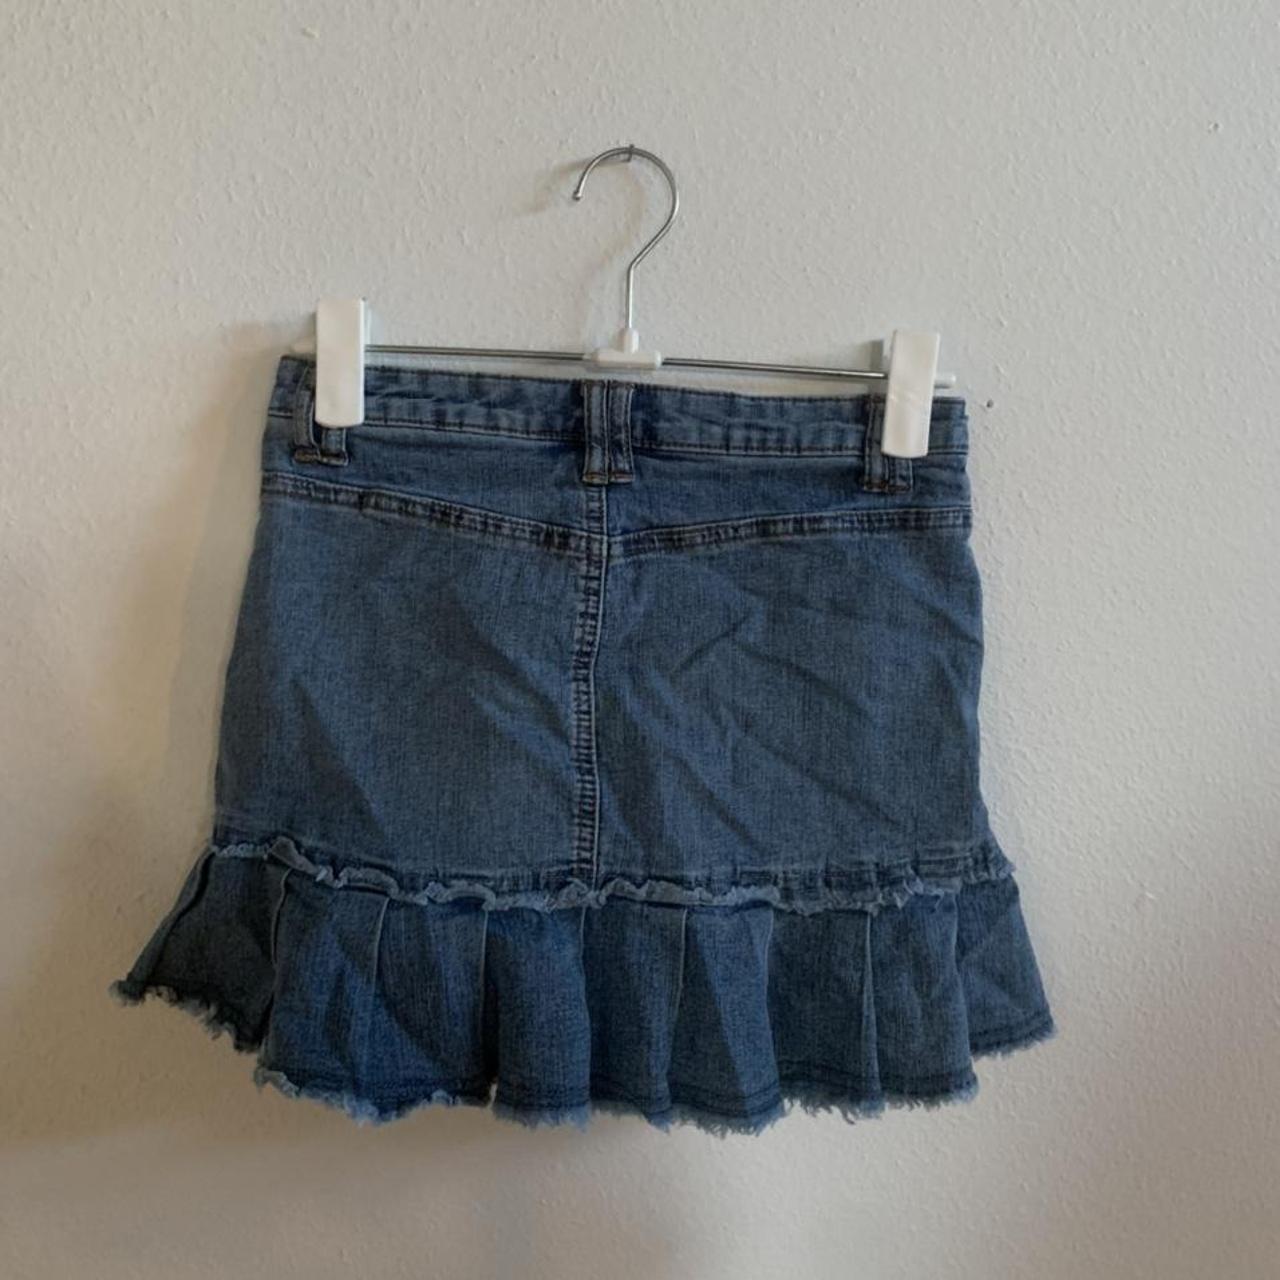 Cute little denim mini skirt - Depop